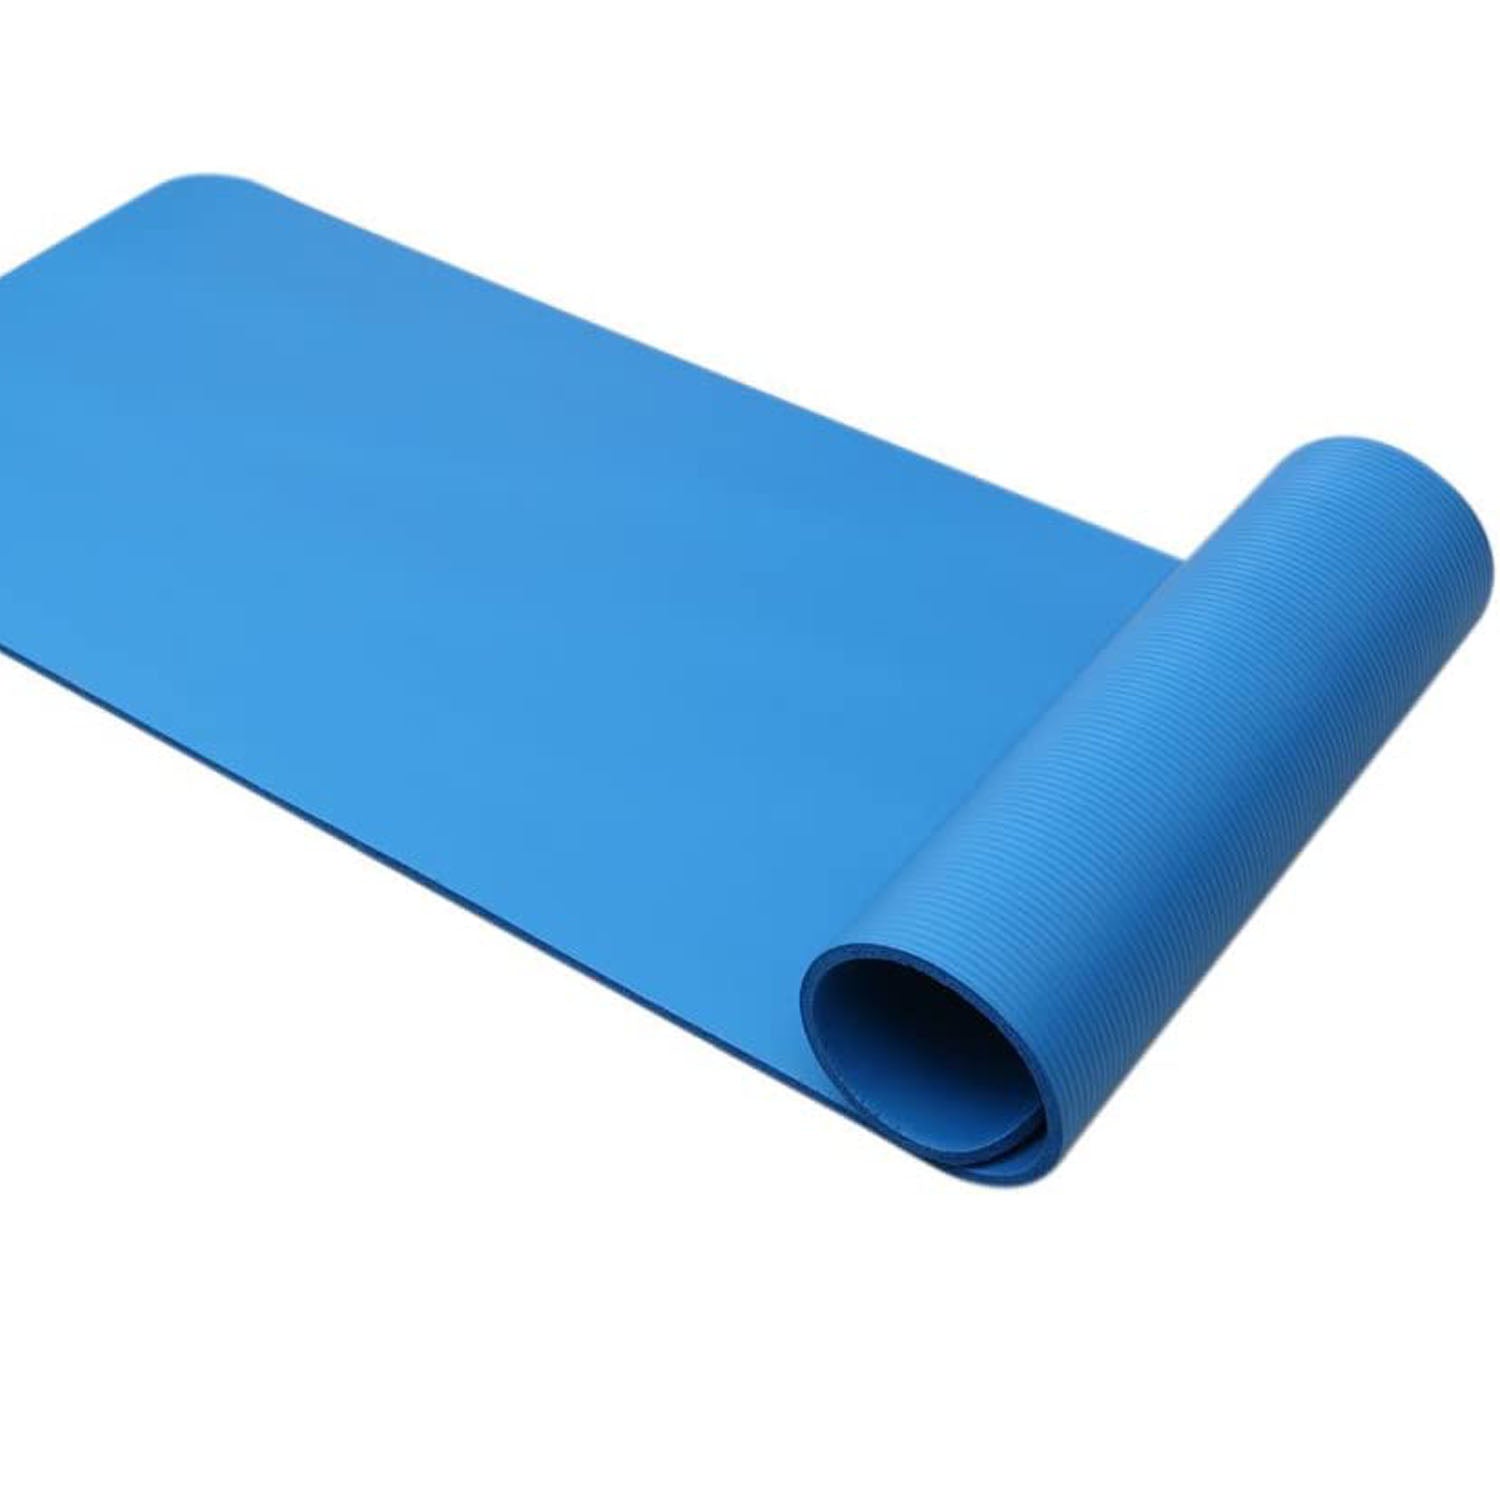 Anti-Slipnbr 15mm Thick Yogamat Made in China - China NBR Yoga Mat and Yoga  Mat price